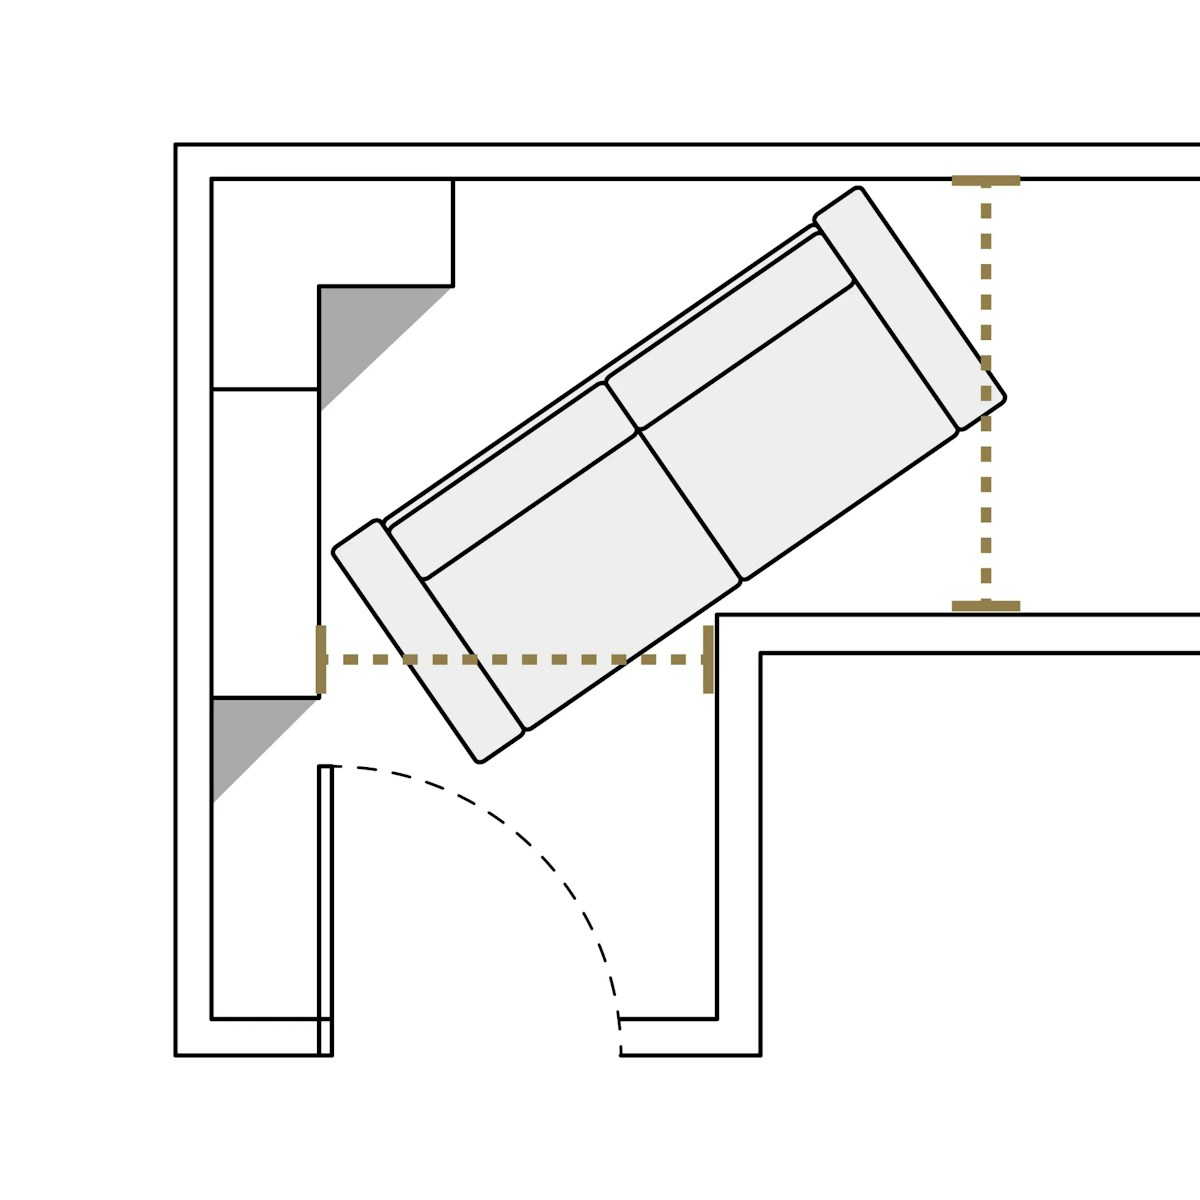 An illustration demonstrating navigating hallways and door frames with a sofa